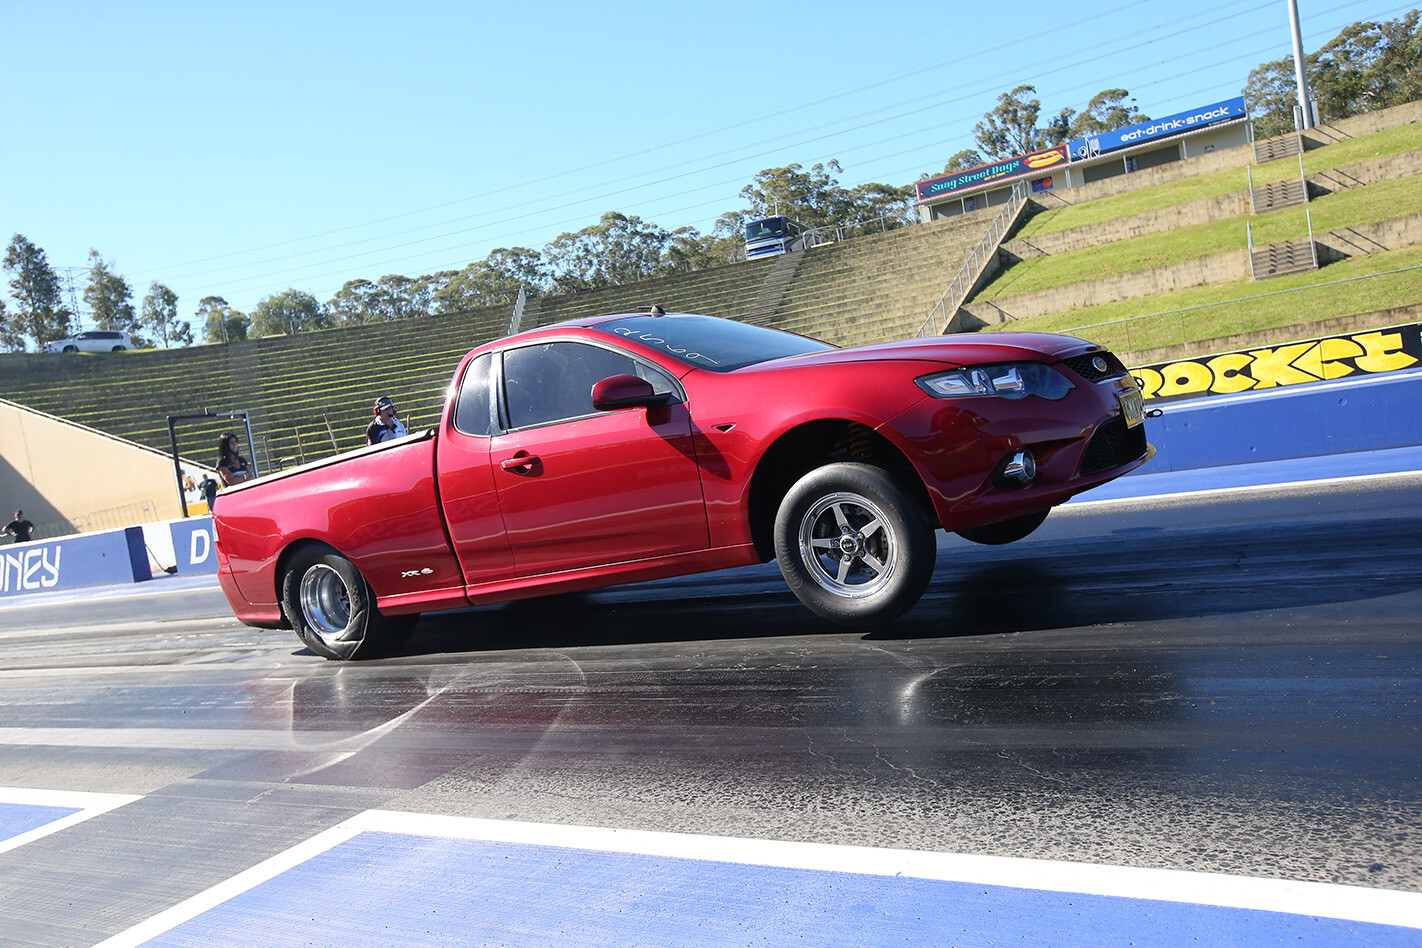 IN VIDEO – Australia’s Quickest XR6 Turbo